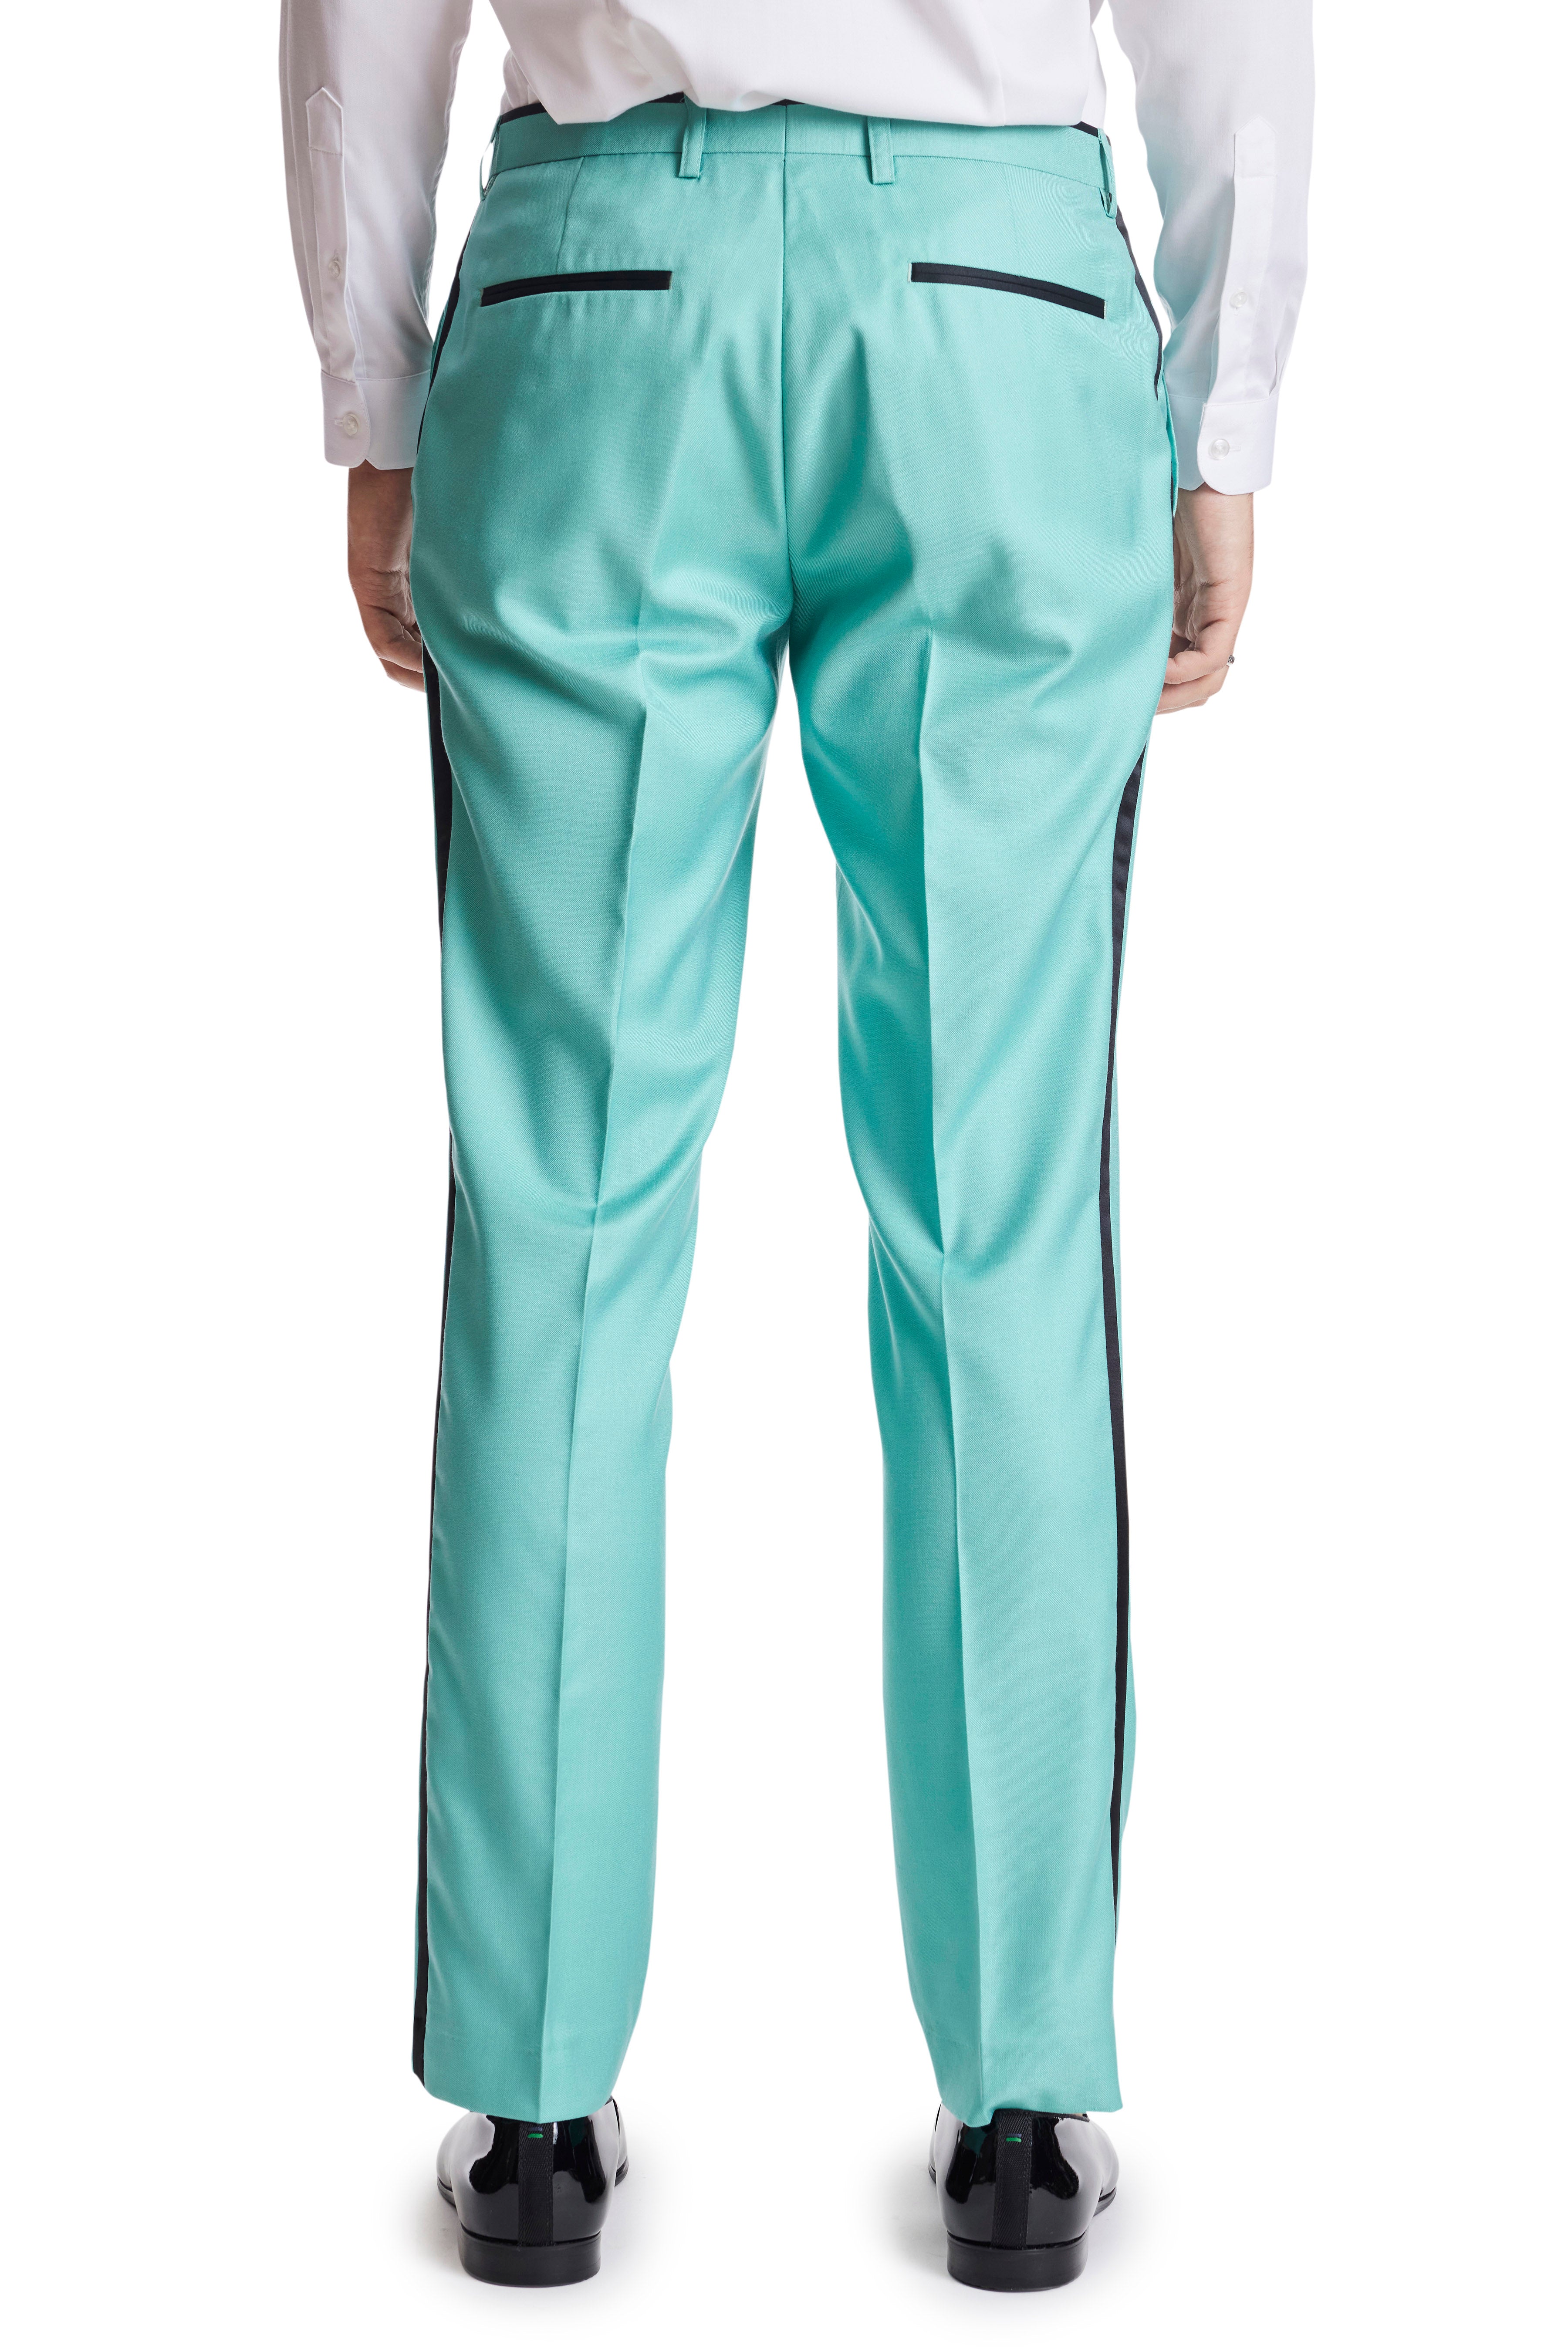 Neil Allyn 7Piece Formal Tuxedo with Flat Front Pants Shirt Green Vest  BowTie  Cuff Links Prom Wedding Cruise  Walmartcom